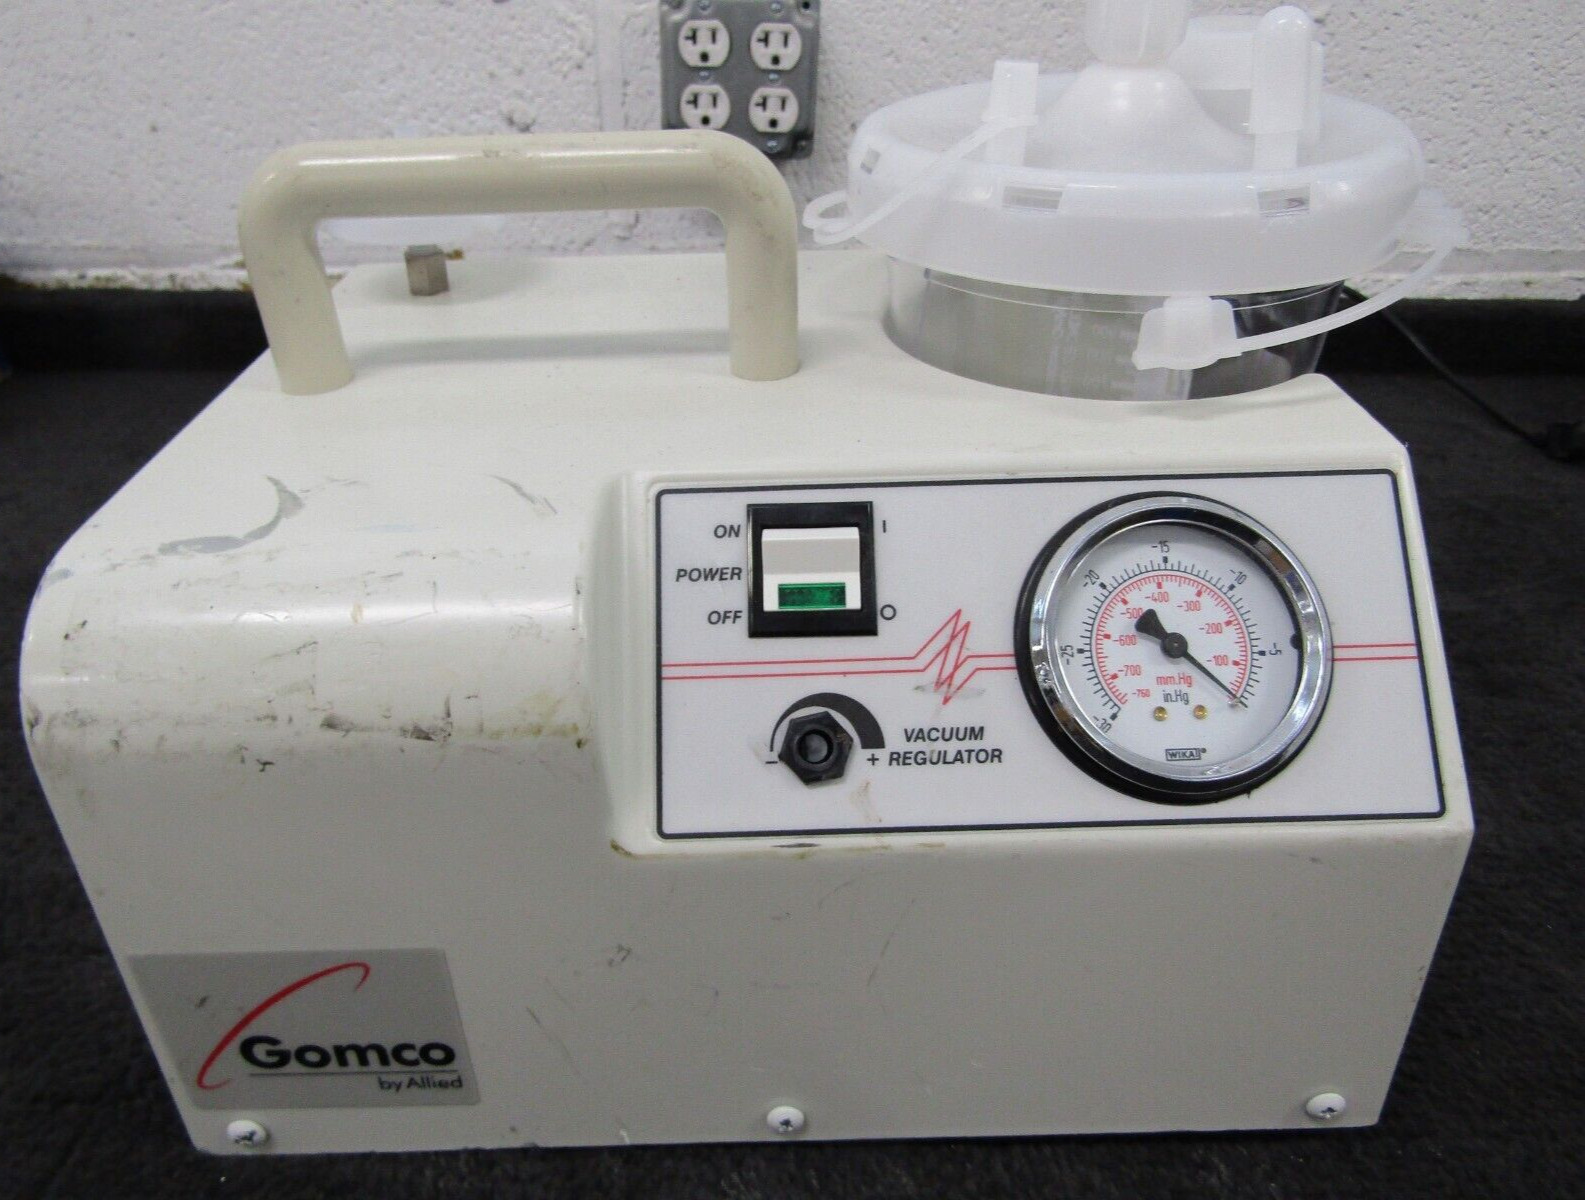 Allied Healthcare GOMCO Portable Aspirator Vacuum Pump Model 4005